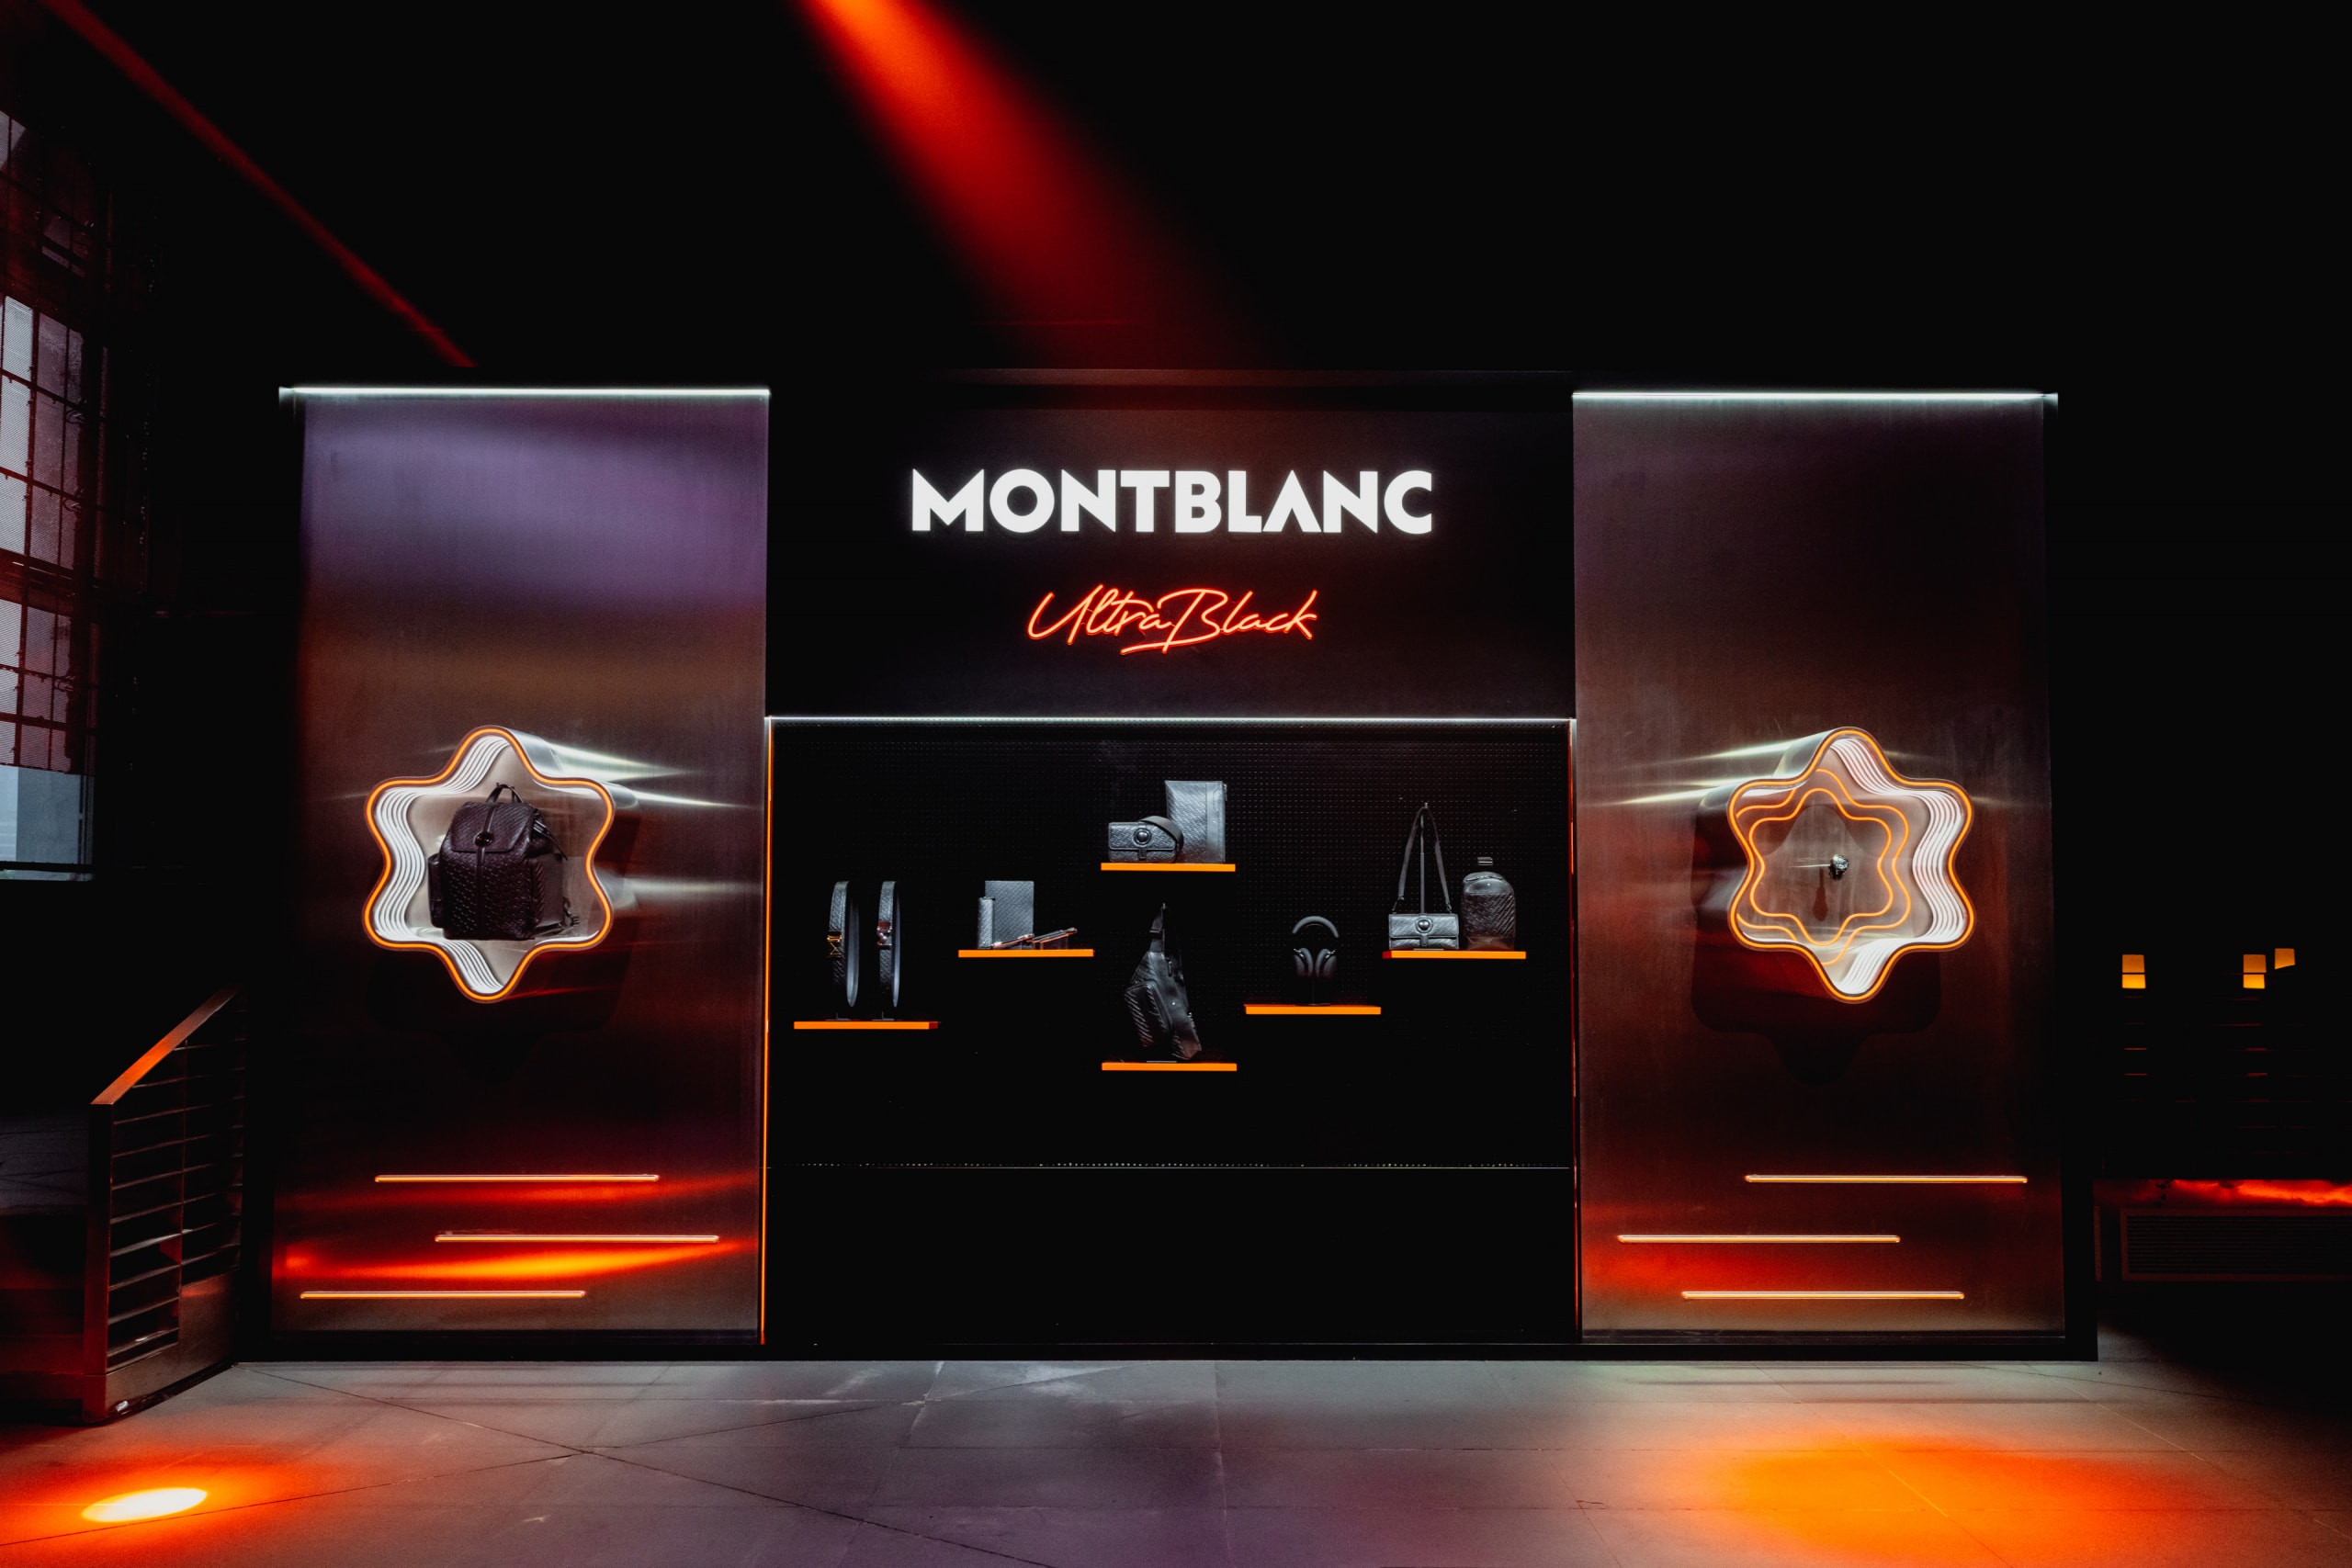 MONTBLANC 全新 UltraBlack 系列发布现场回顾